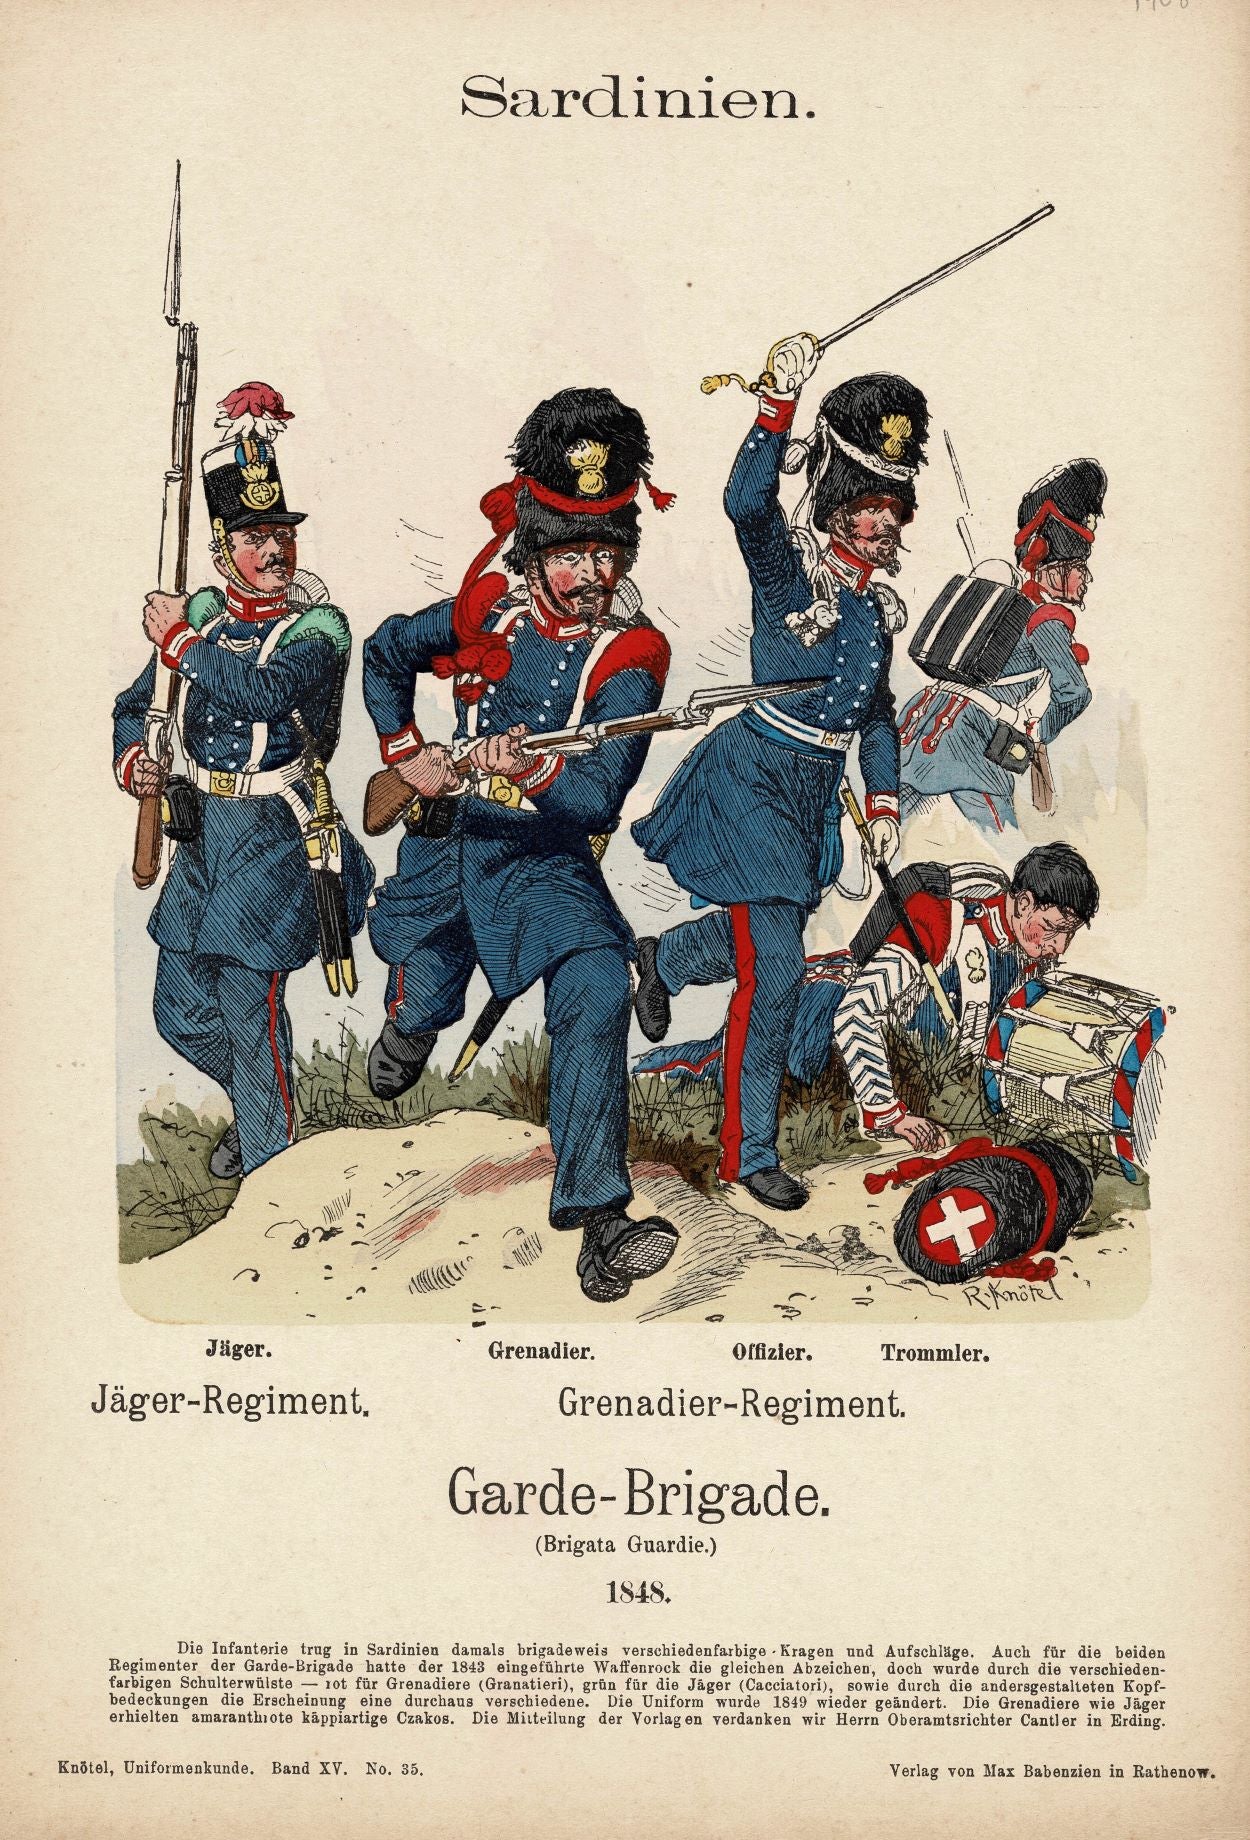 Sardinian Military Uniforms from 1848, Richard Knötel, 1908